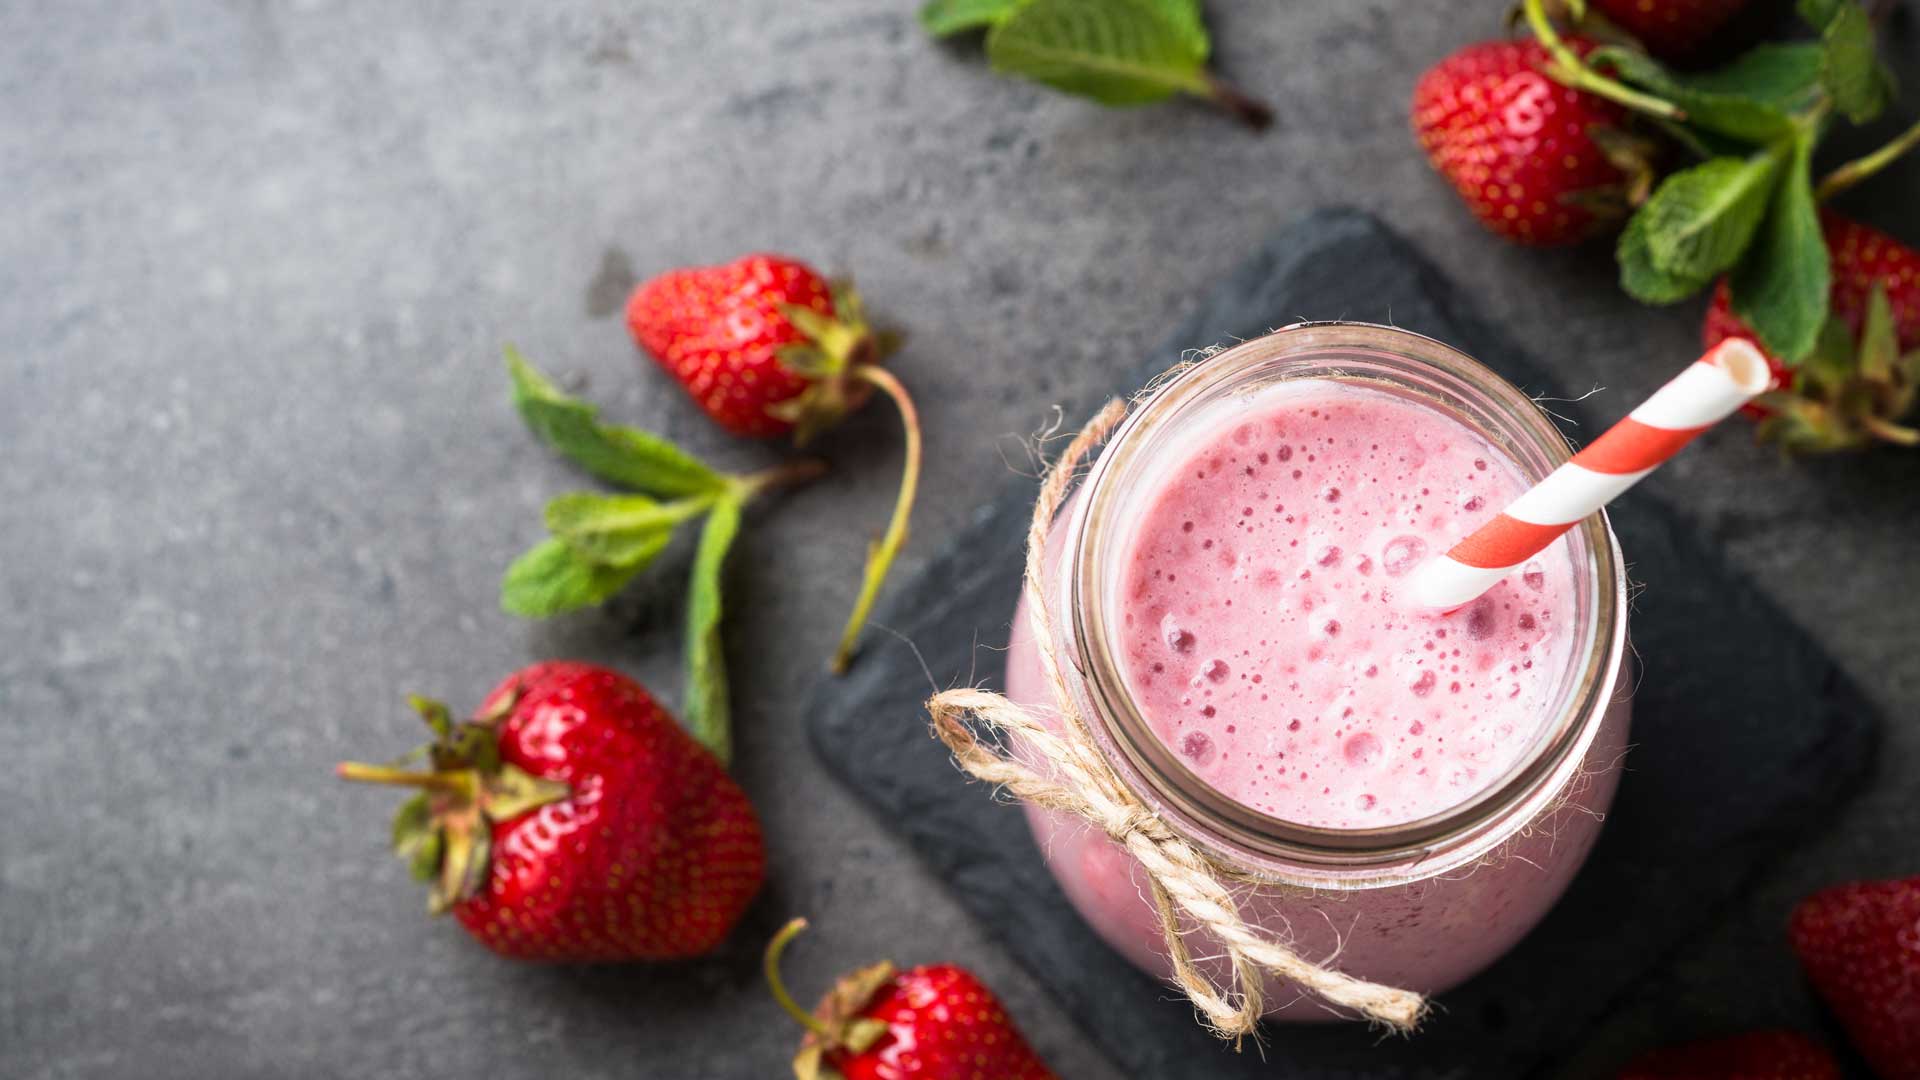 simple strawberry smoothie recipe with almond milk